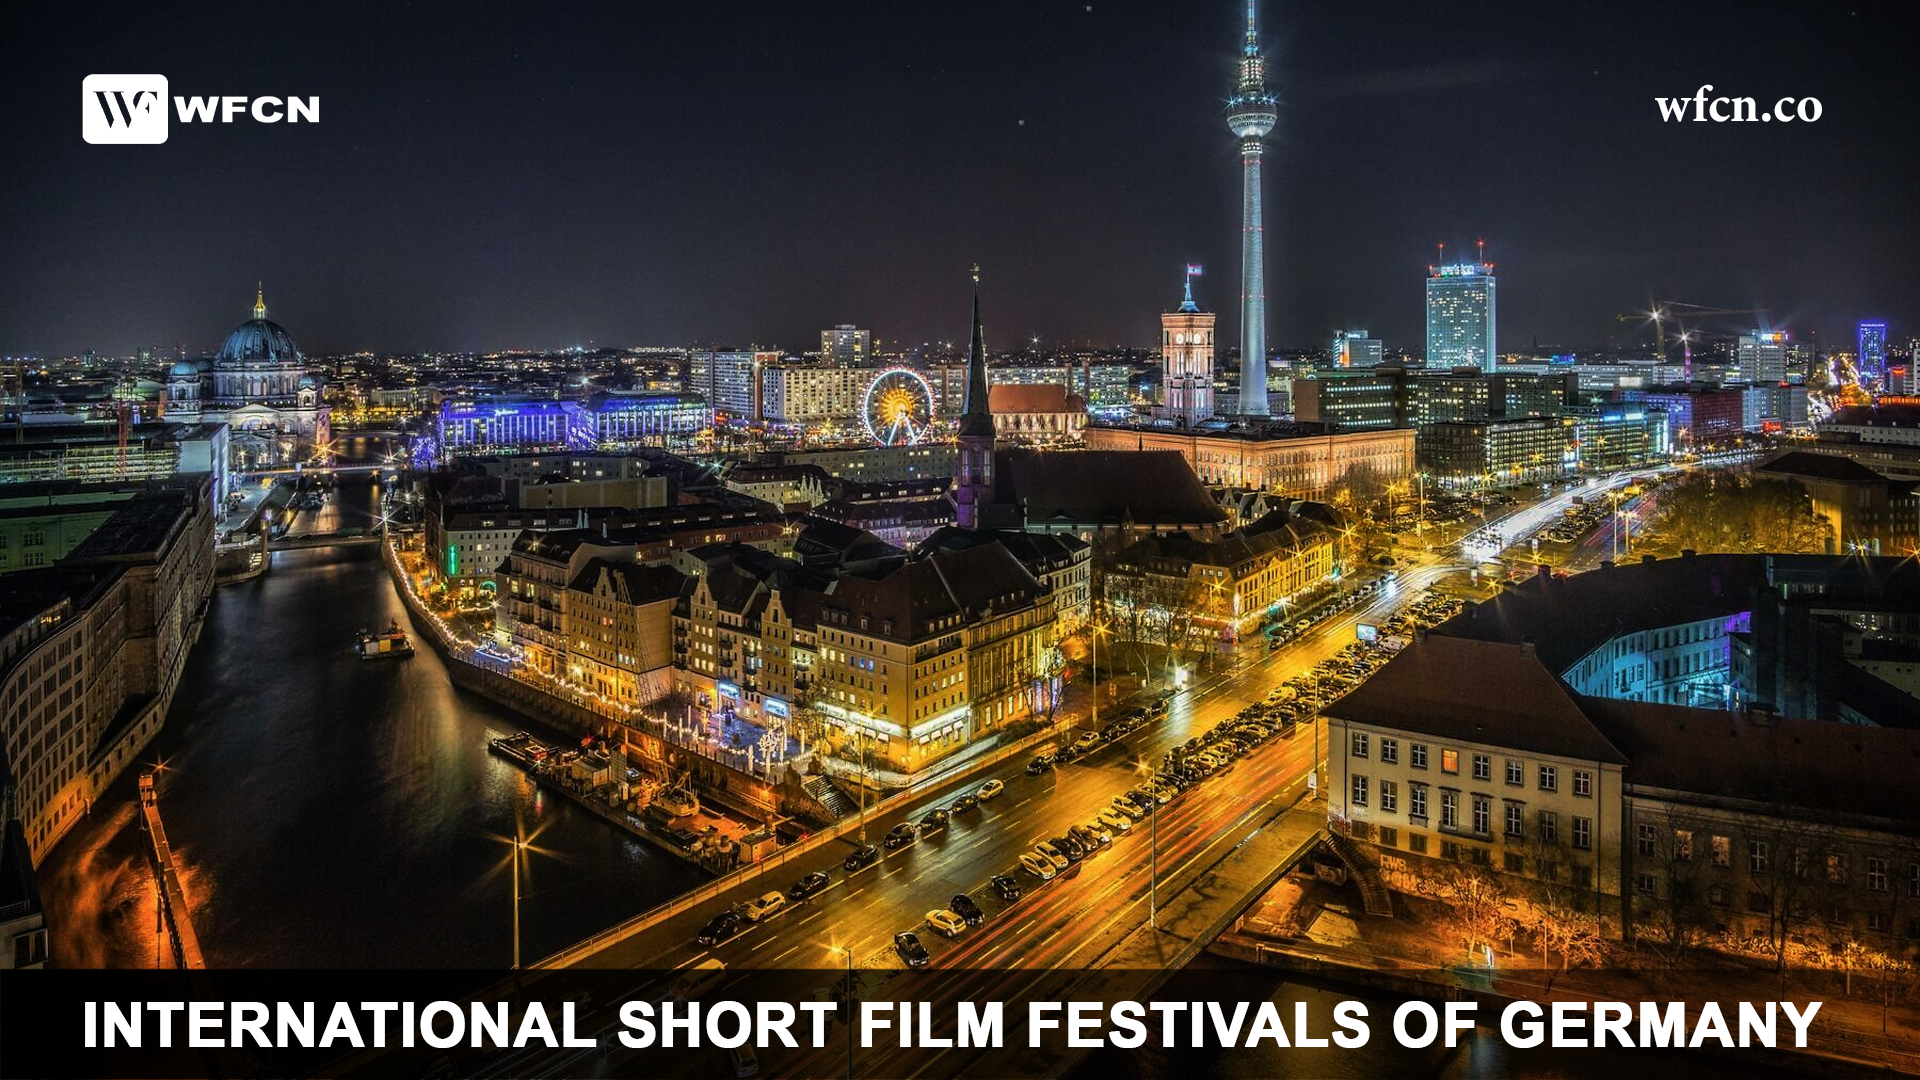 International Short Film Festivals of Germany